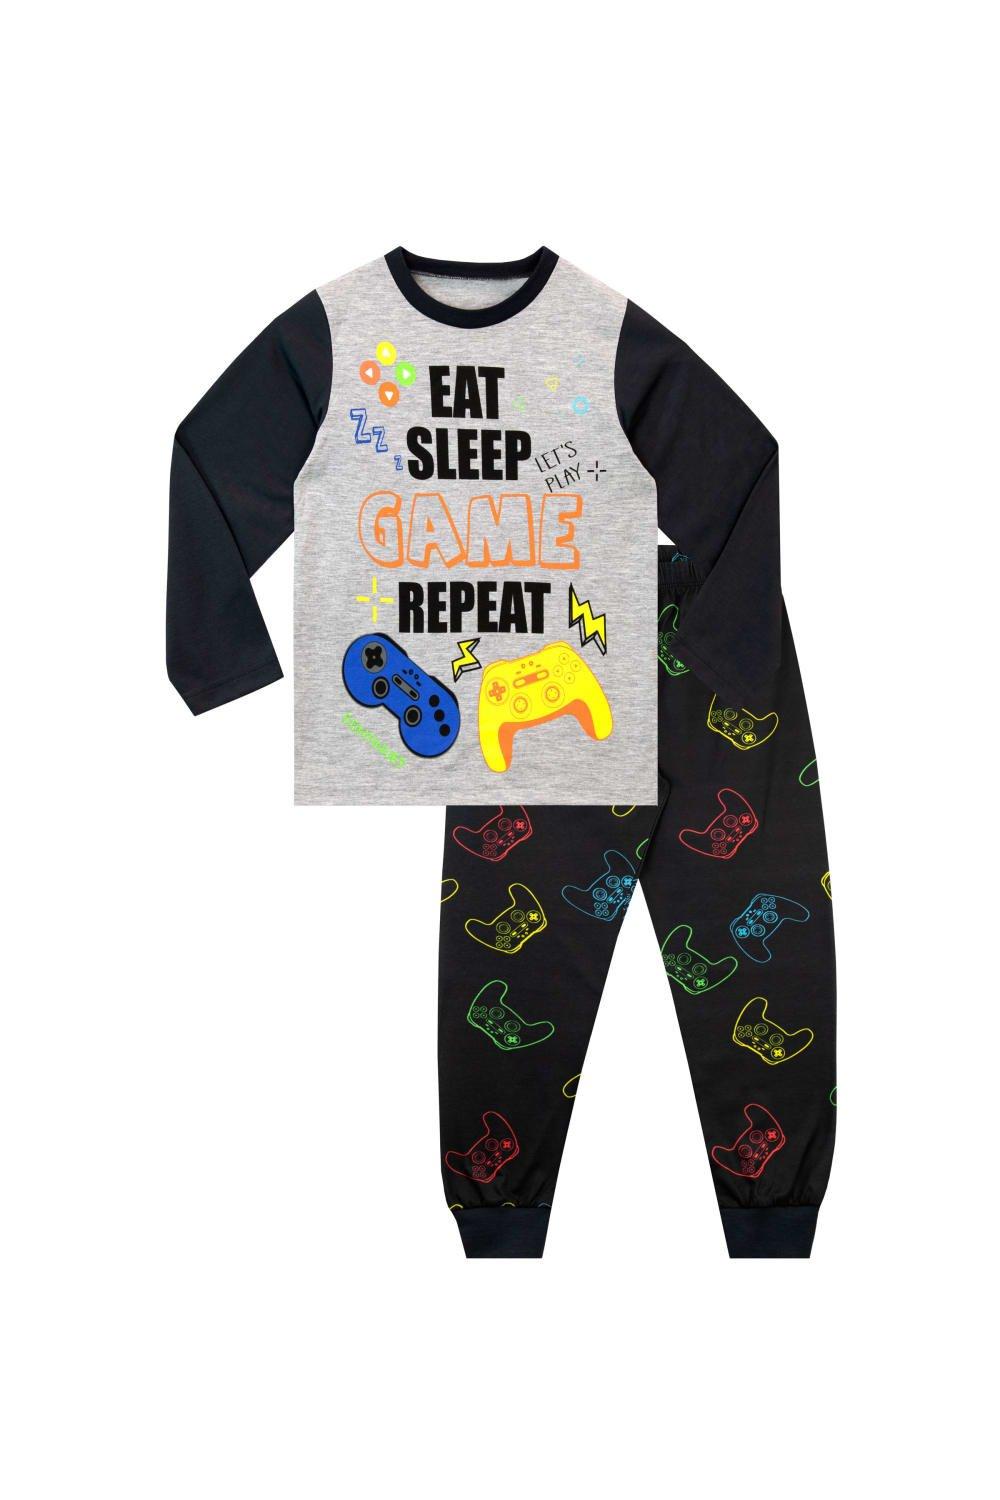 Eat Sleep Game Repeat Pyjamas